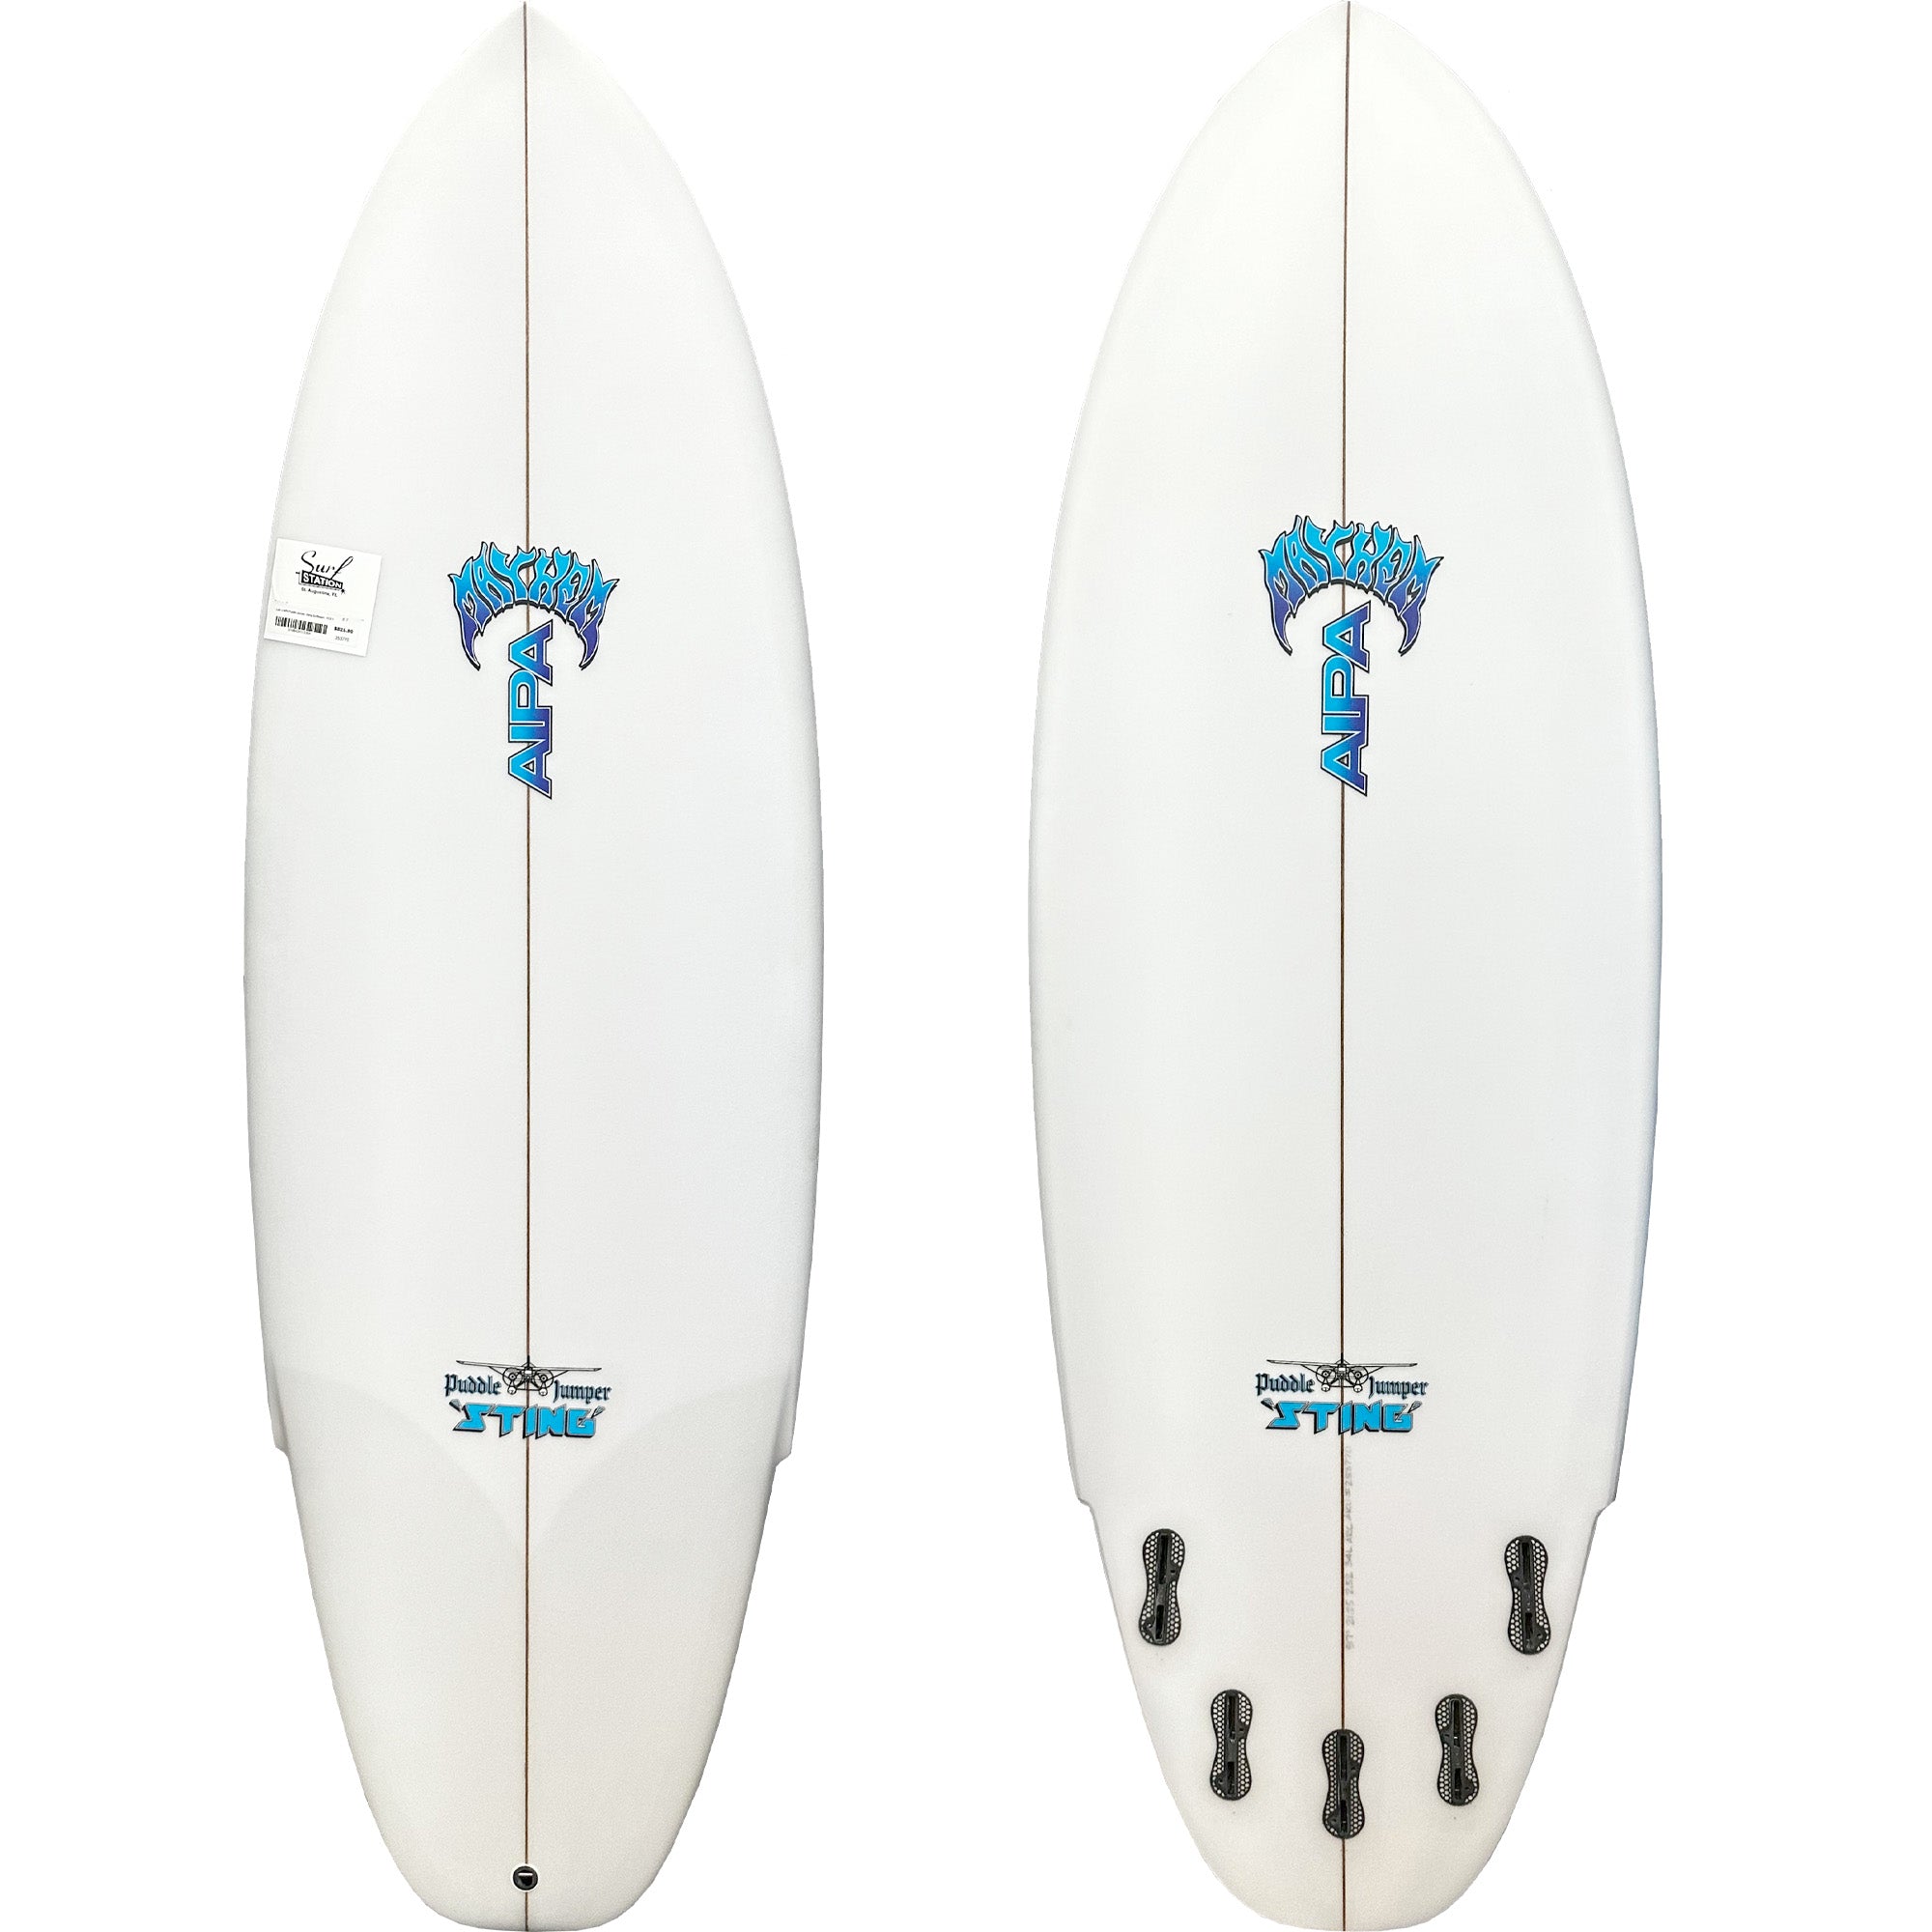 Lost x AIPA Puddle Jumper Sting Surfboard - FCS II